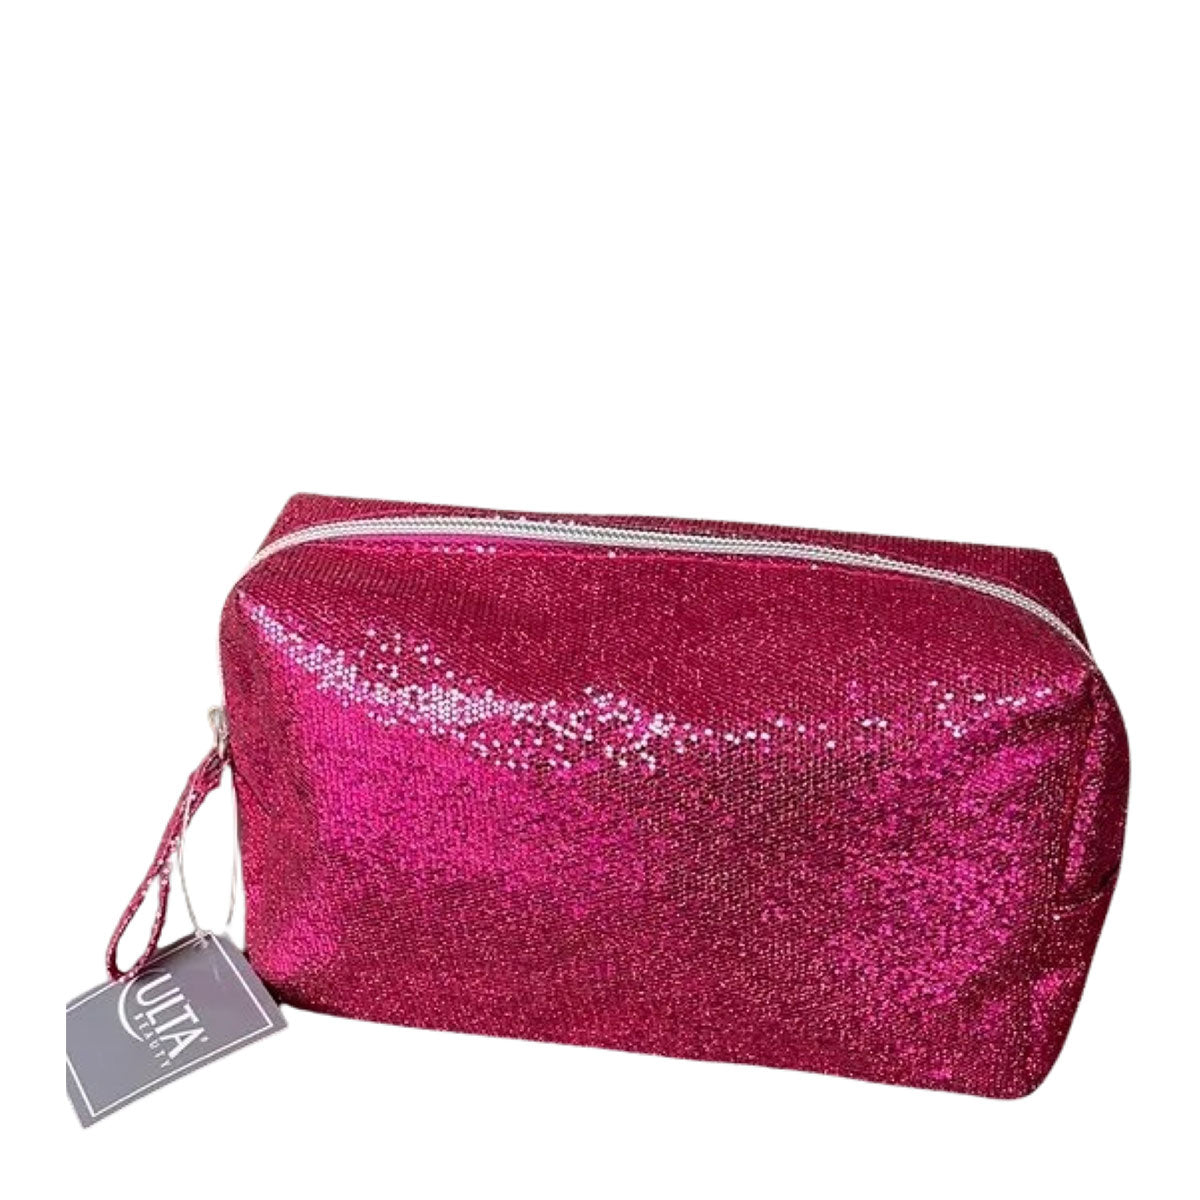 Ulta Beauty Sparkly Metallic Pink Cosmetic Bag